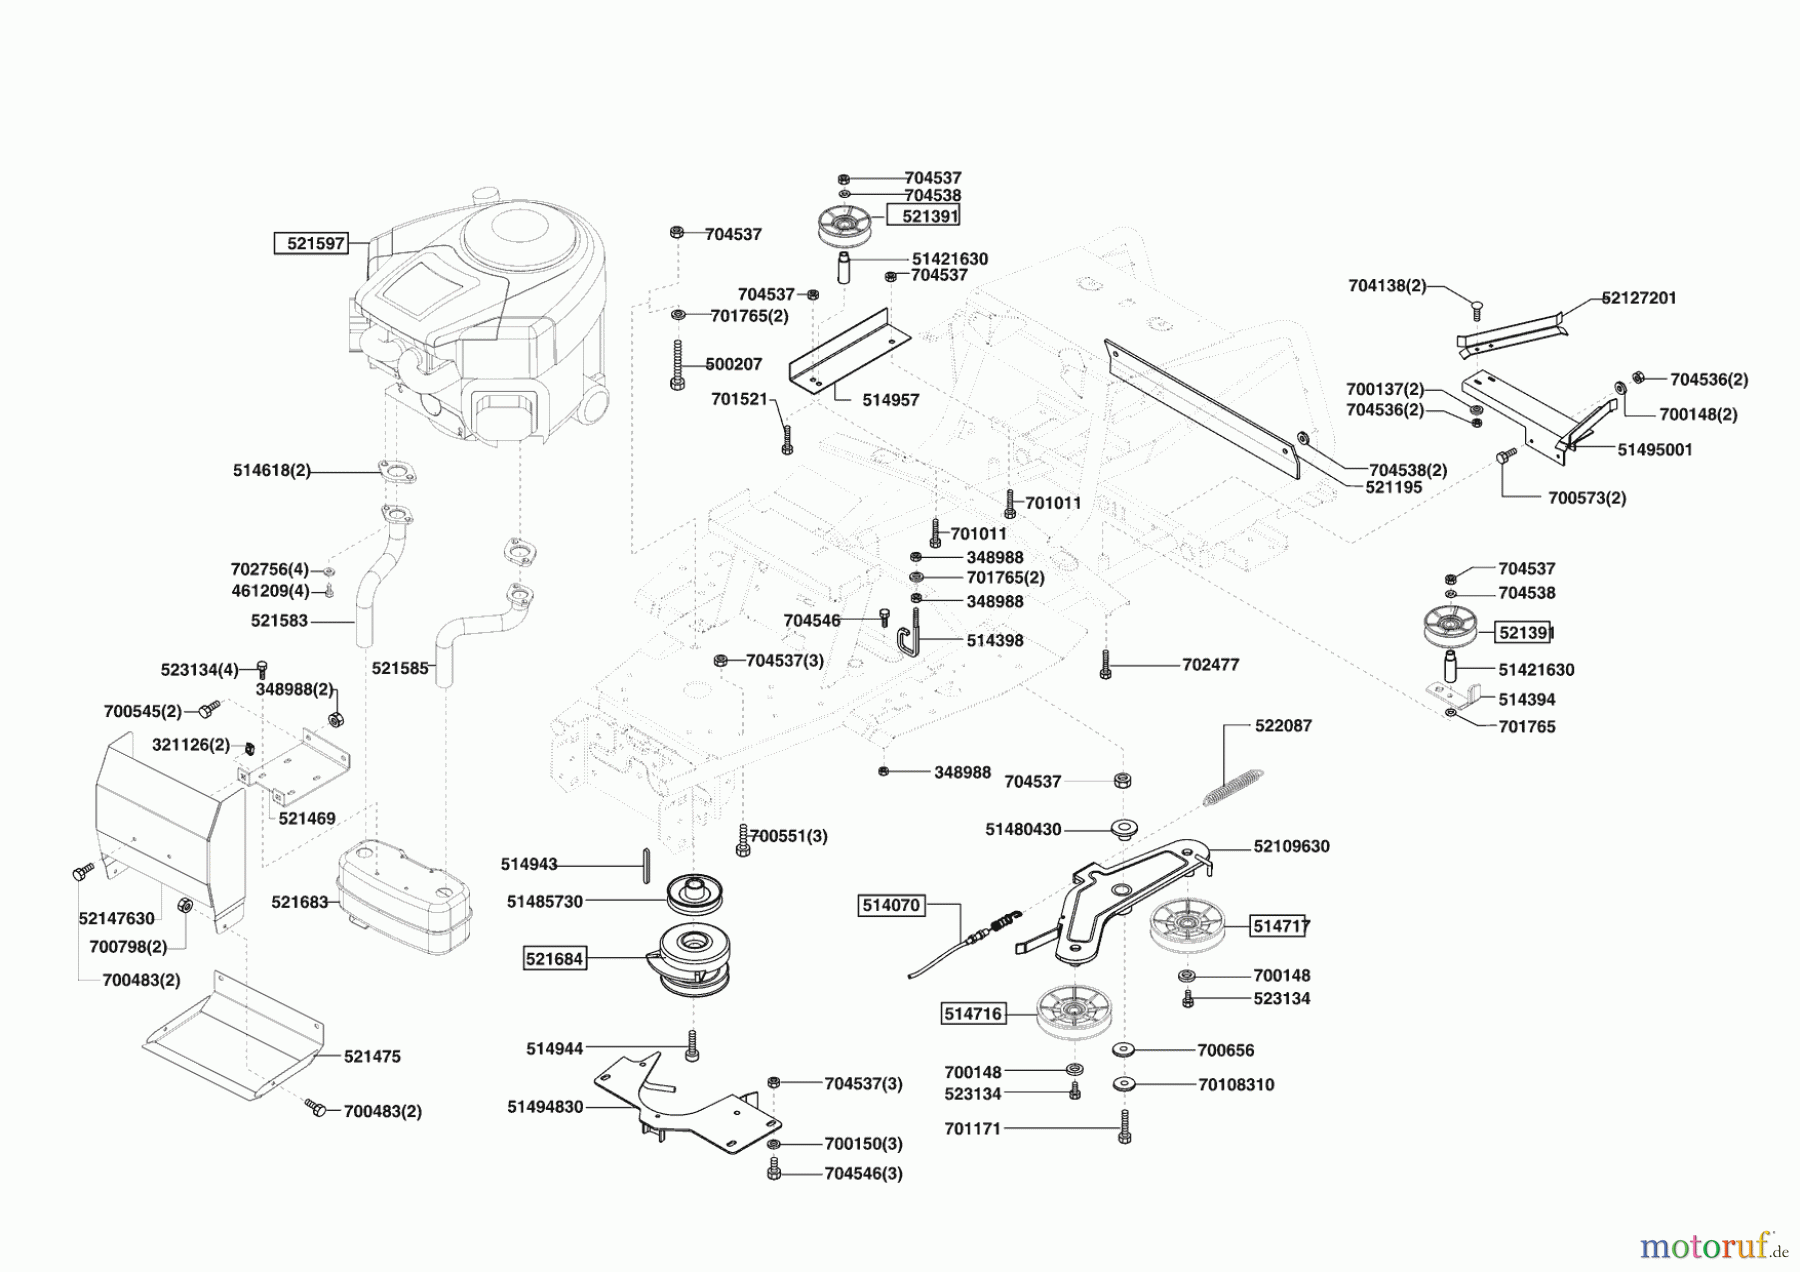  AL-KO Gartentechnik Rasentraktor T20-102 HDE-MK RAIFFEISEN Seite 4